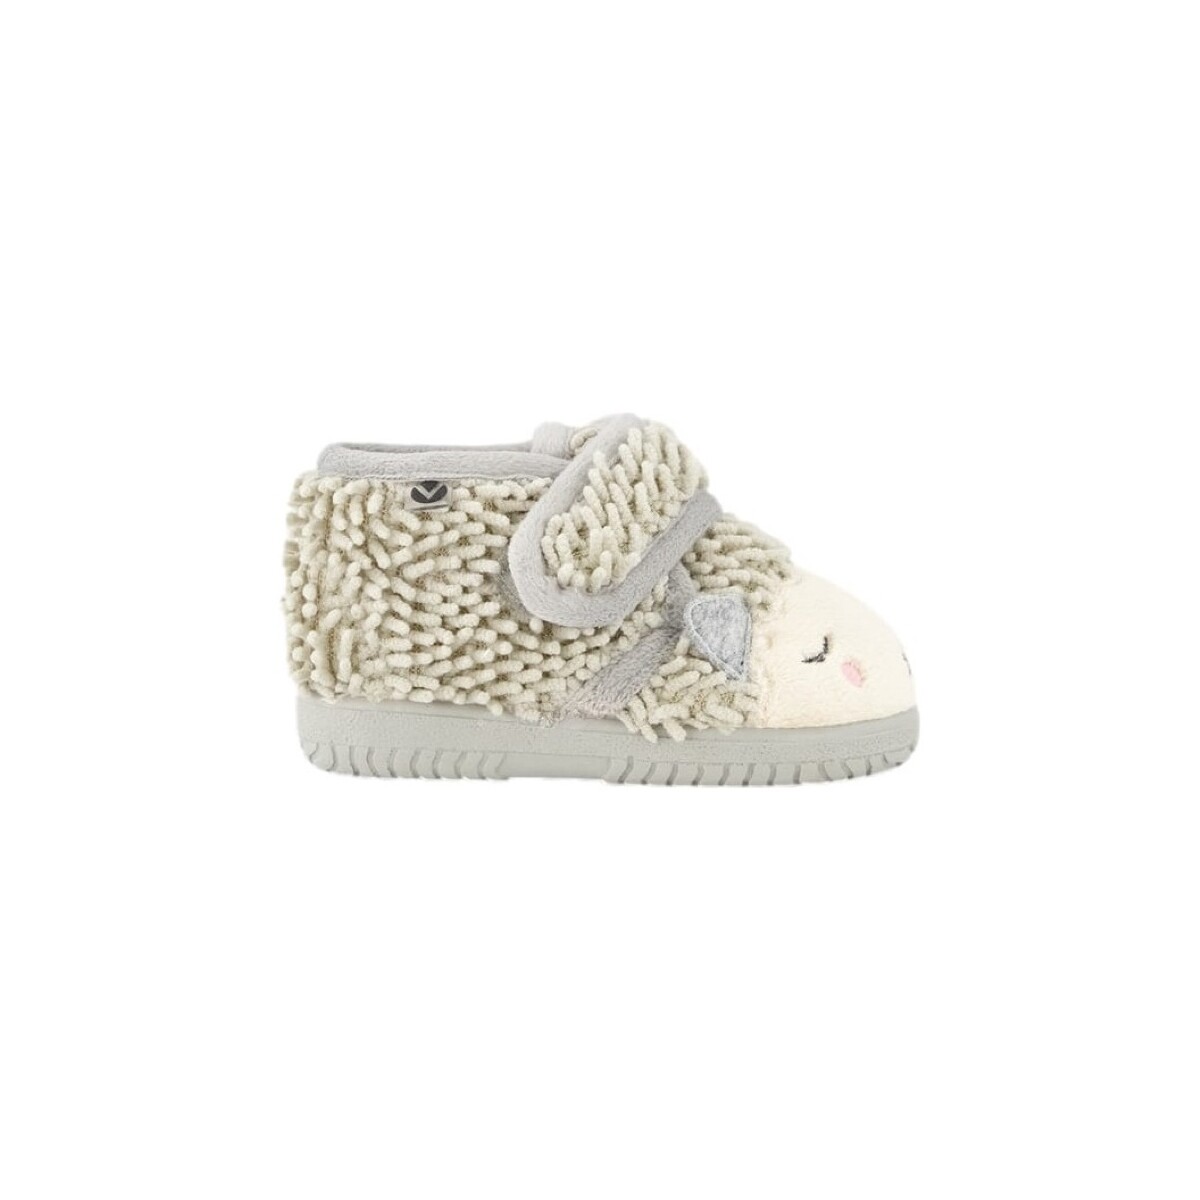 Victoria Gris Baby Shoes 05119 - Piedra mCOUitqX